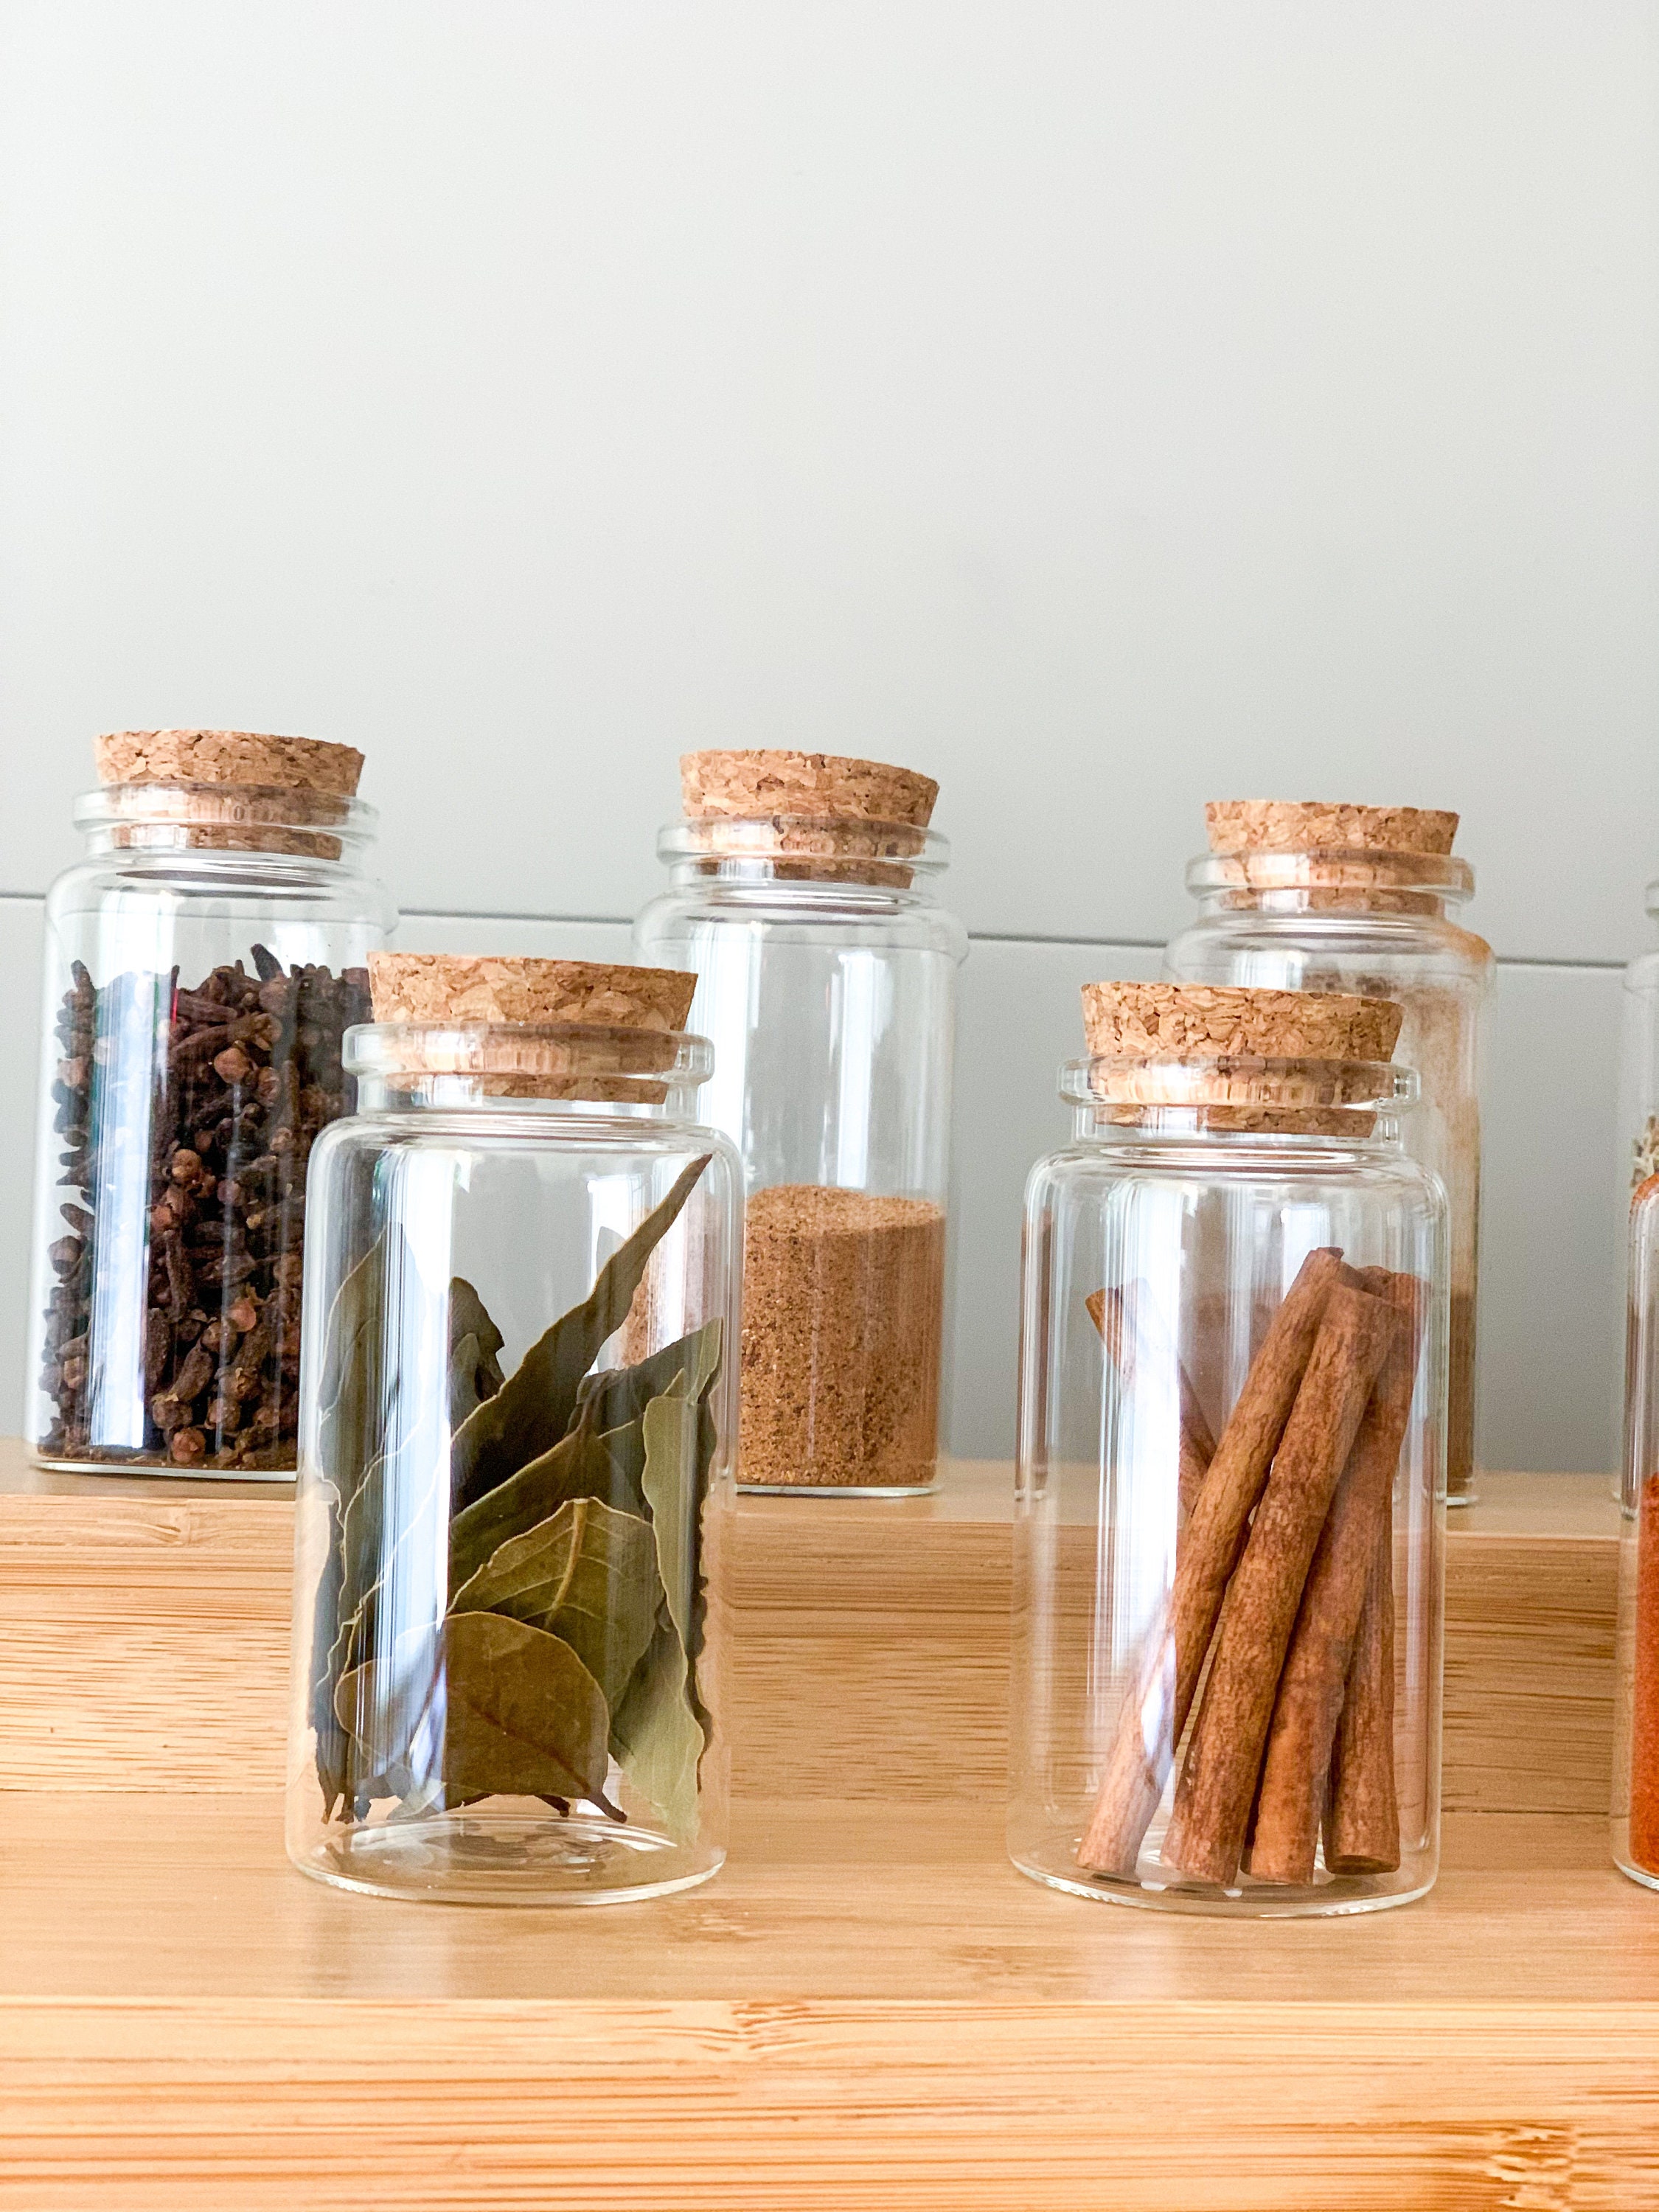 Labelled Spice Jars With Cork Lid Set of 6 Home Organisation 